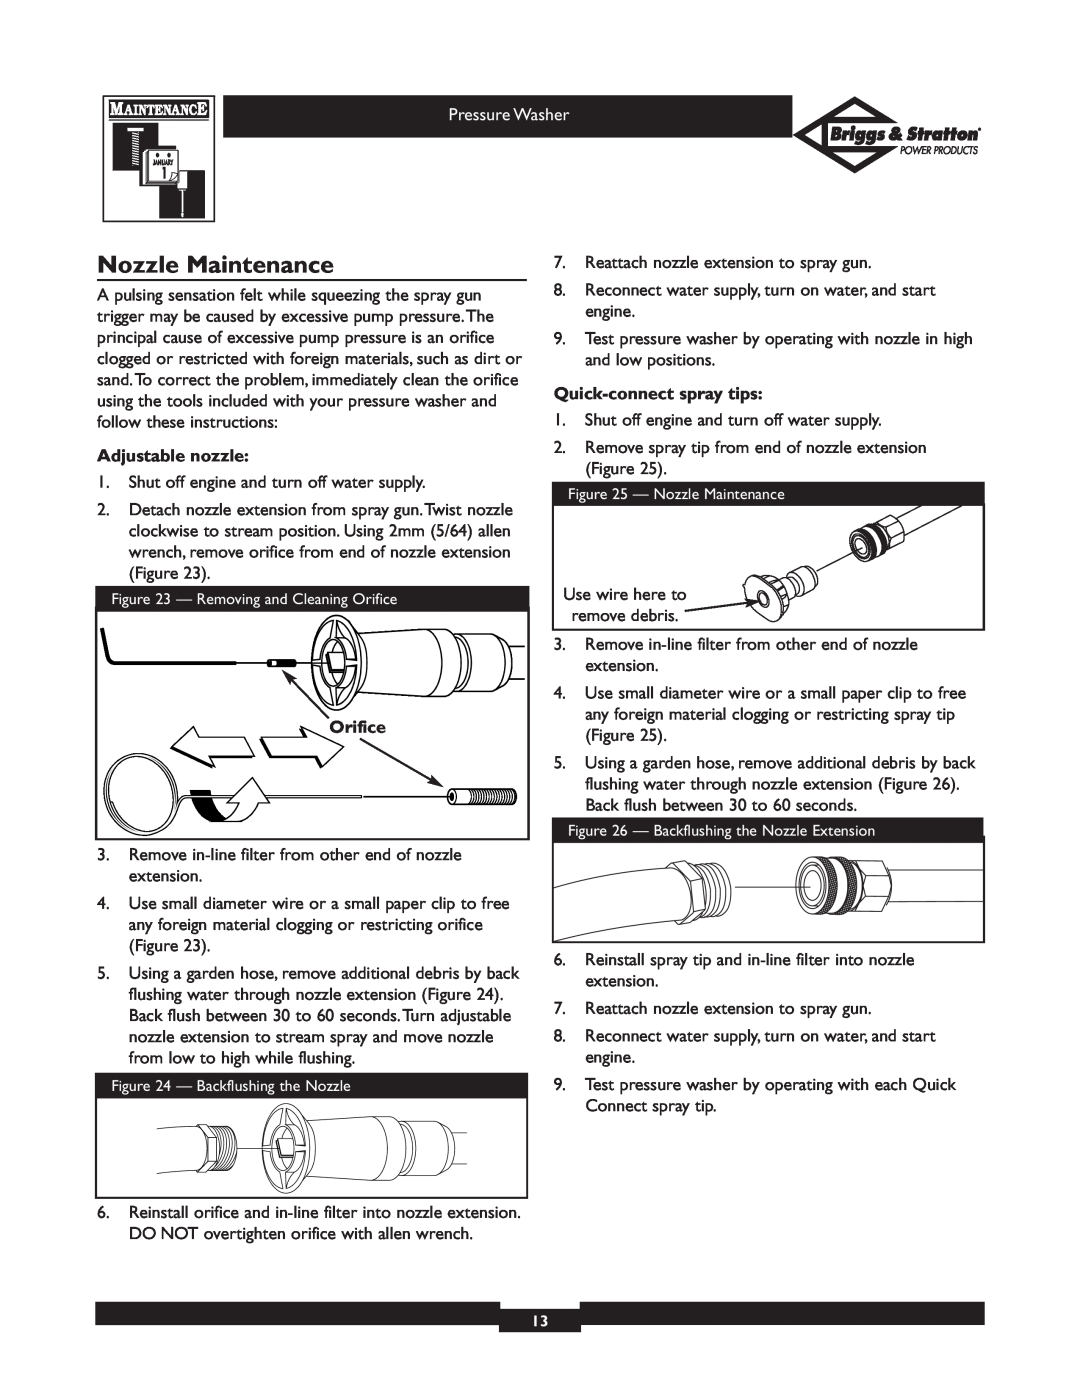 Briggs & Stratton 01936 owner manual Nozzle Maintenance, Adjustable nozzle, Orifice, Quick-connectspray tips 